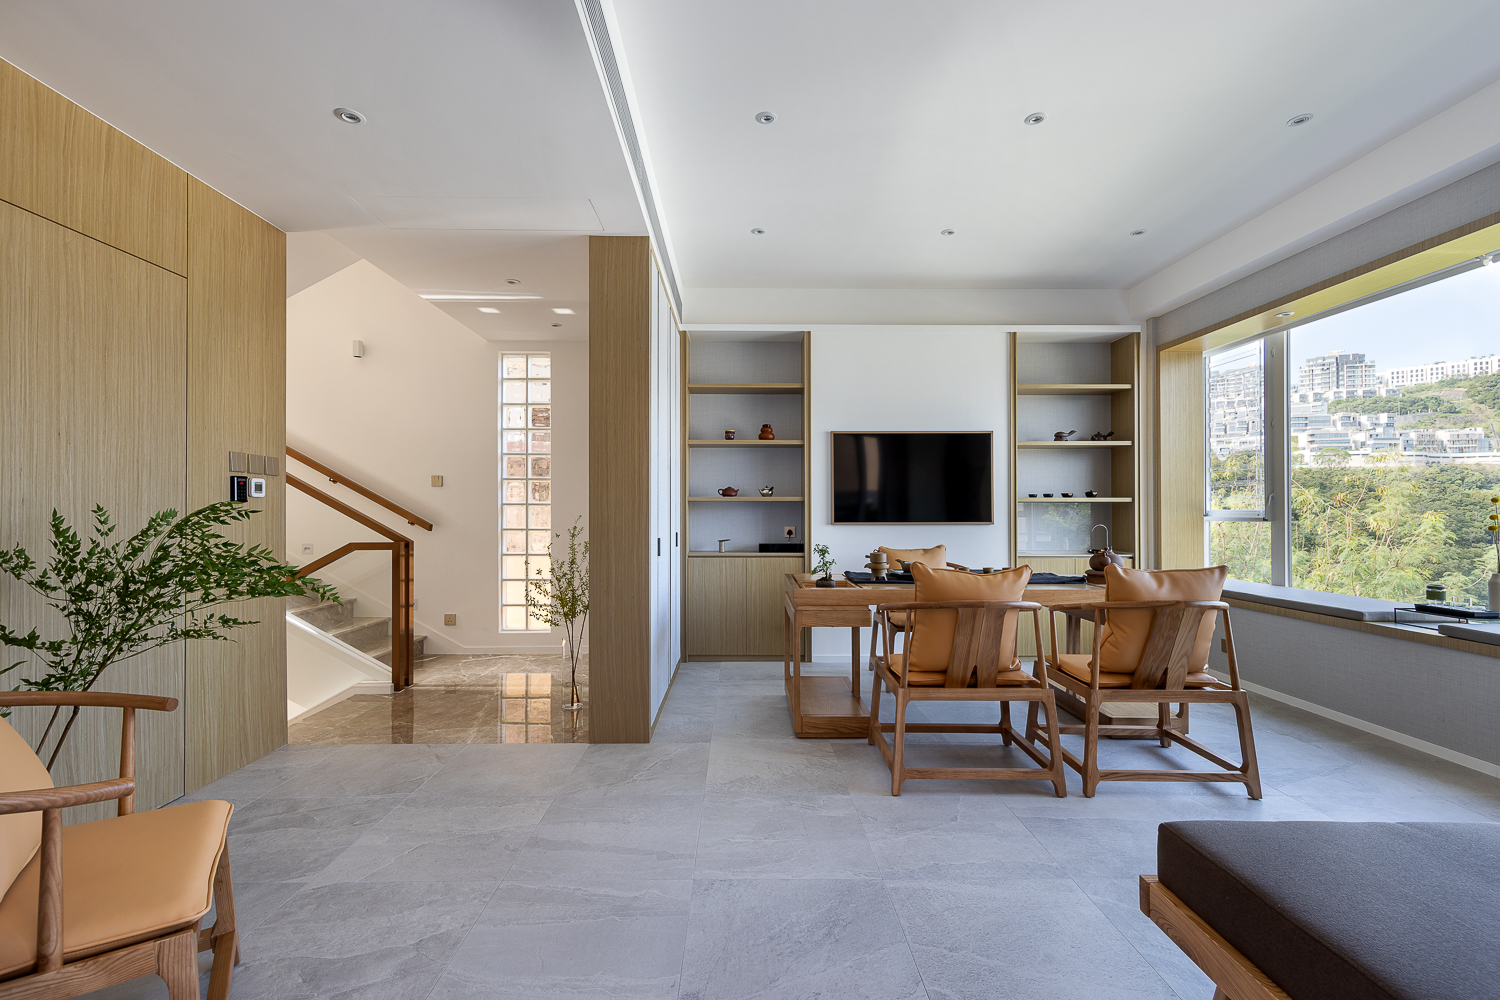 Matthew Li - Grande Interior Design - 皓朗山莊